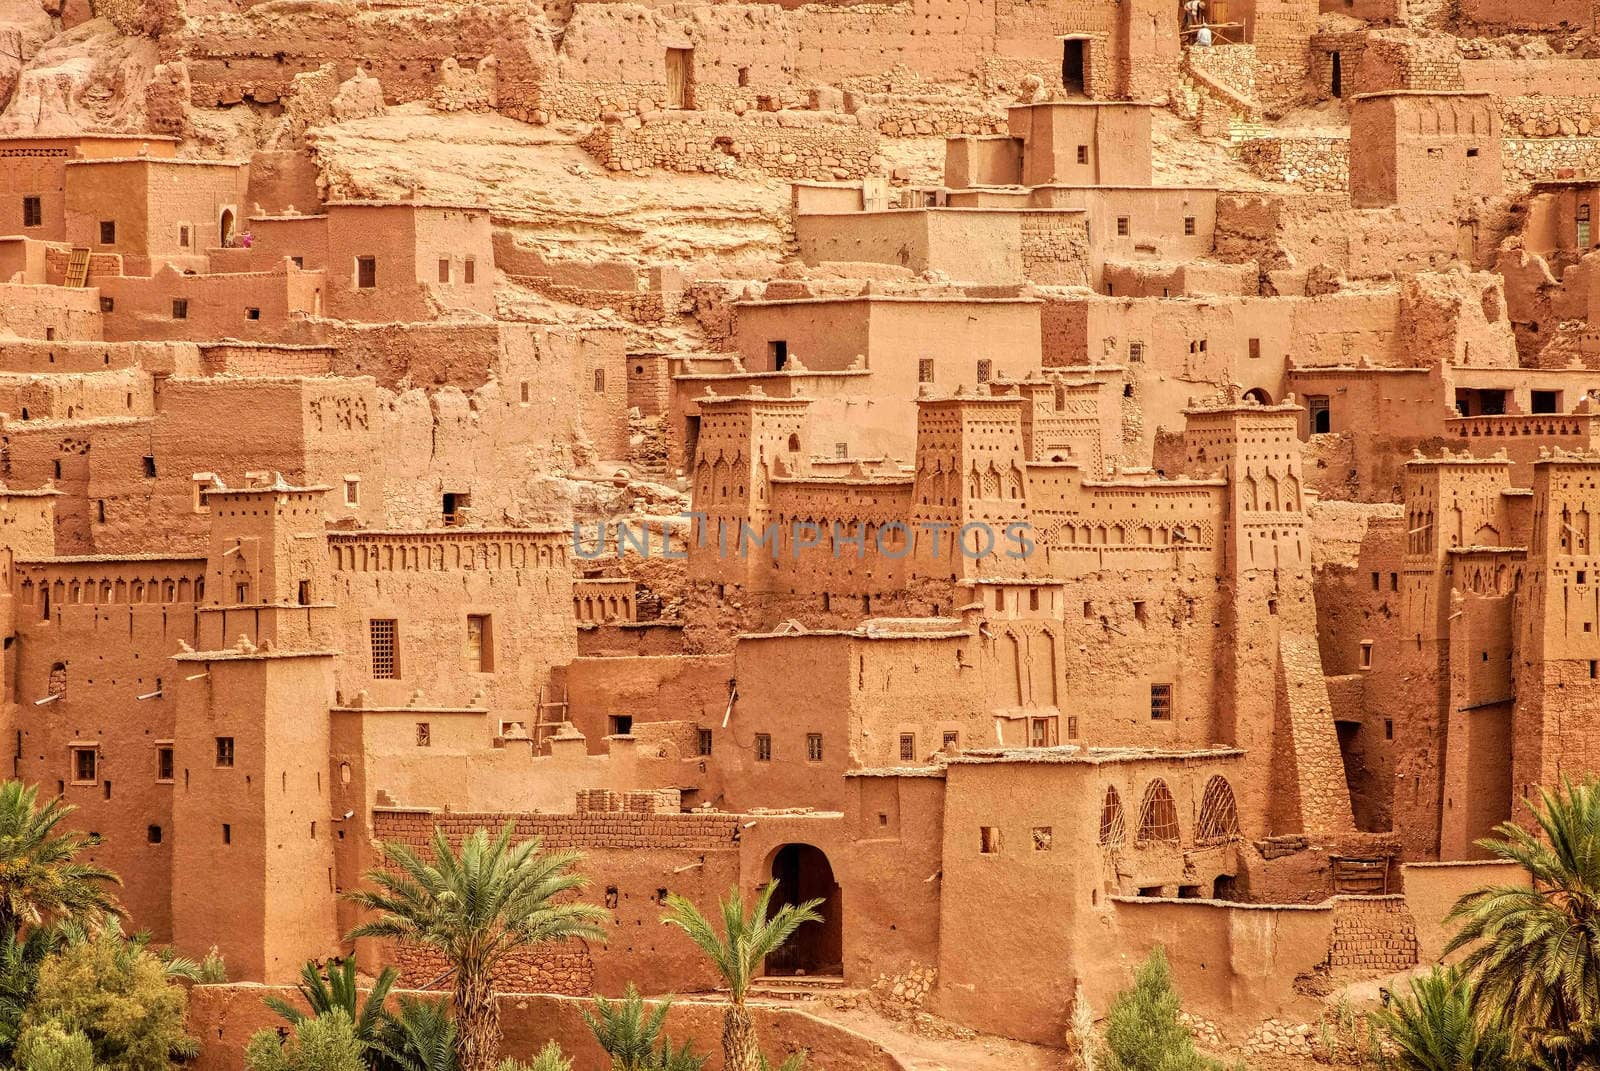 Clay kasbah Ait Benhaddou, Morocco by GlobePhotos